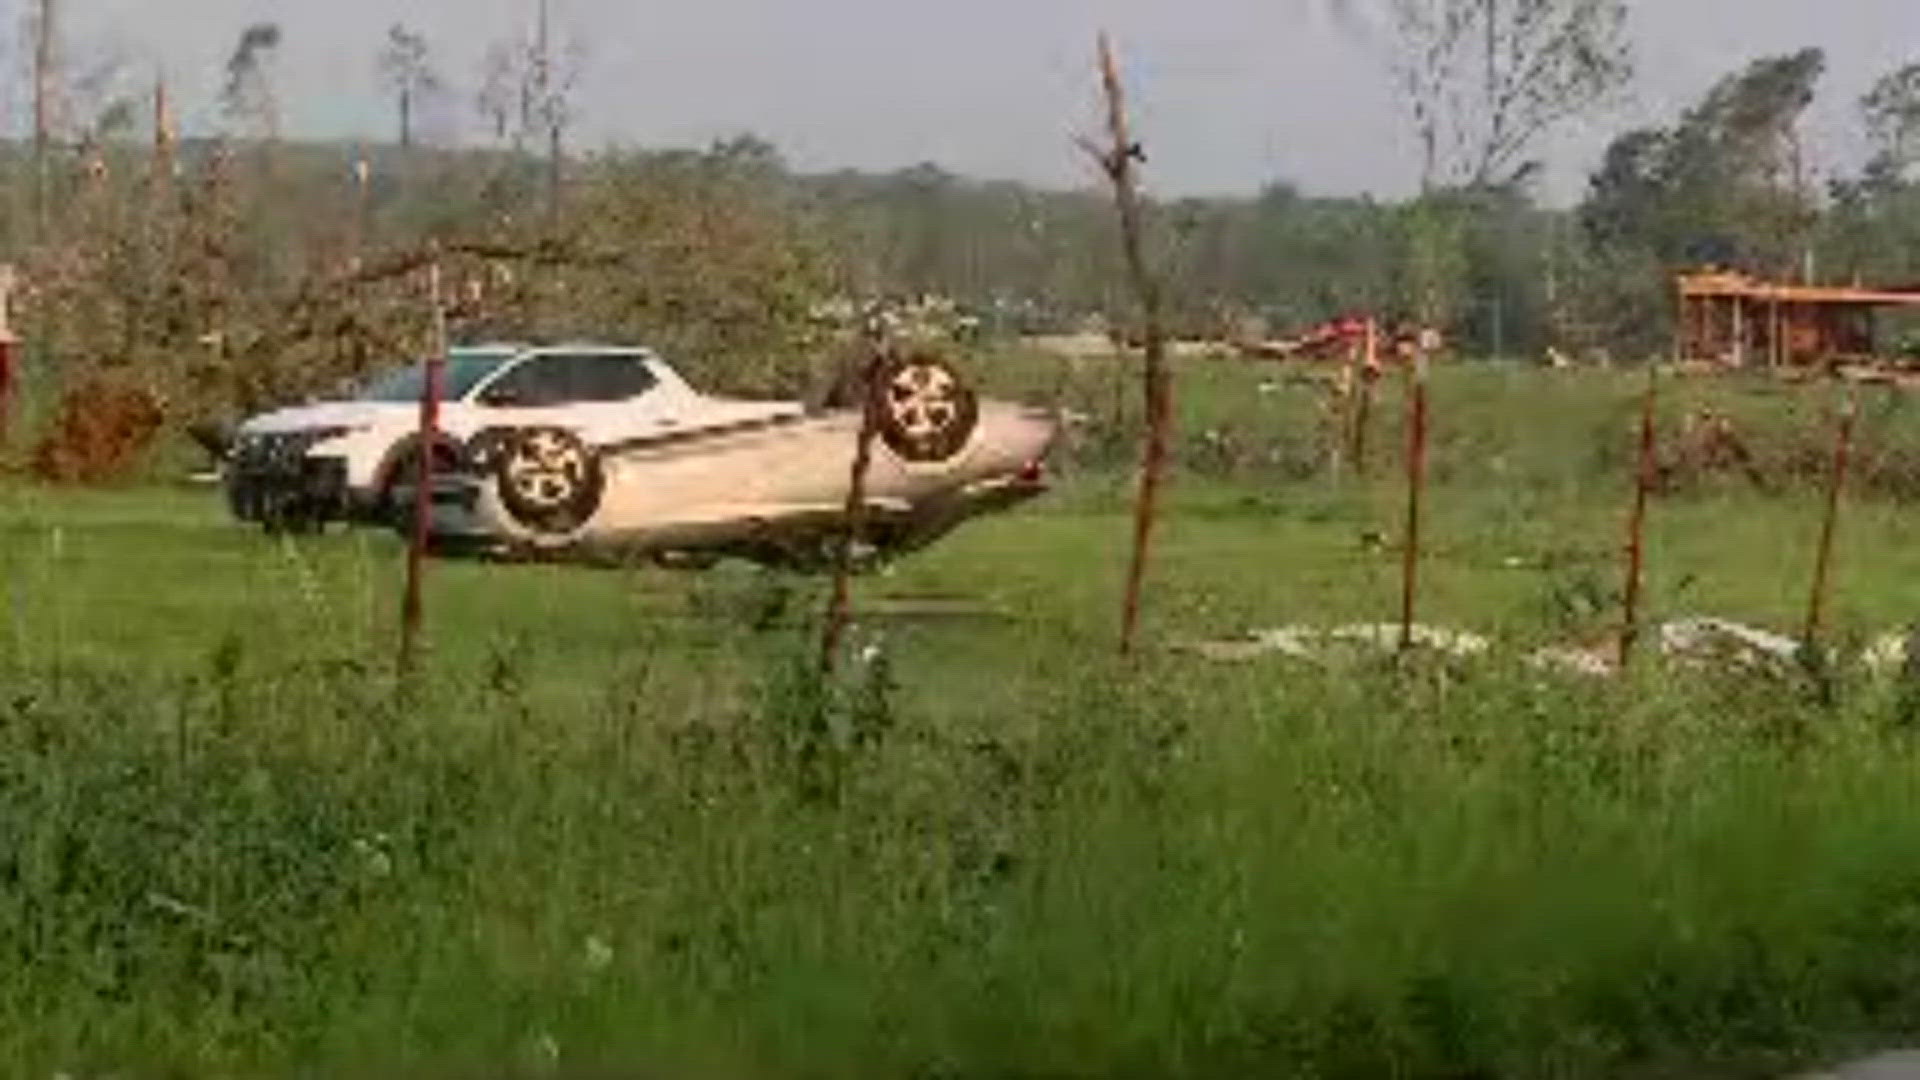 Extensive damage was seen in parts of Benton County.